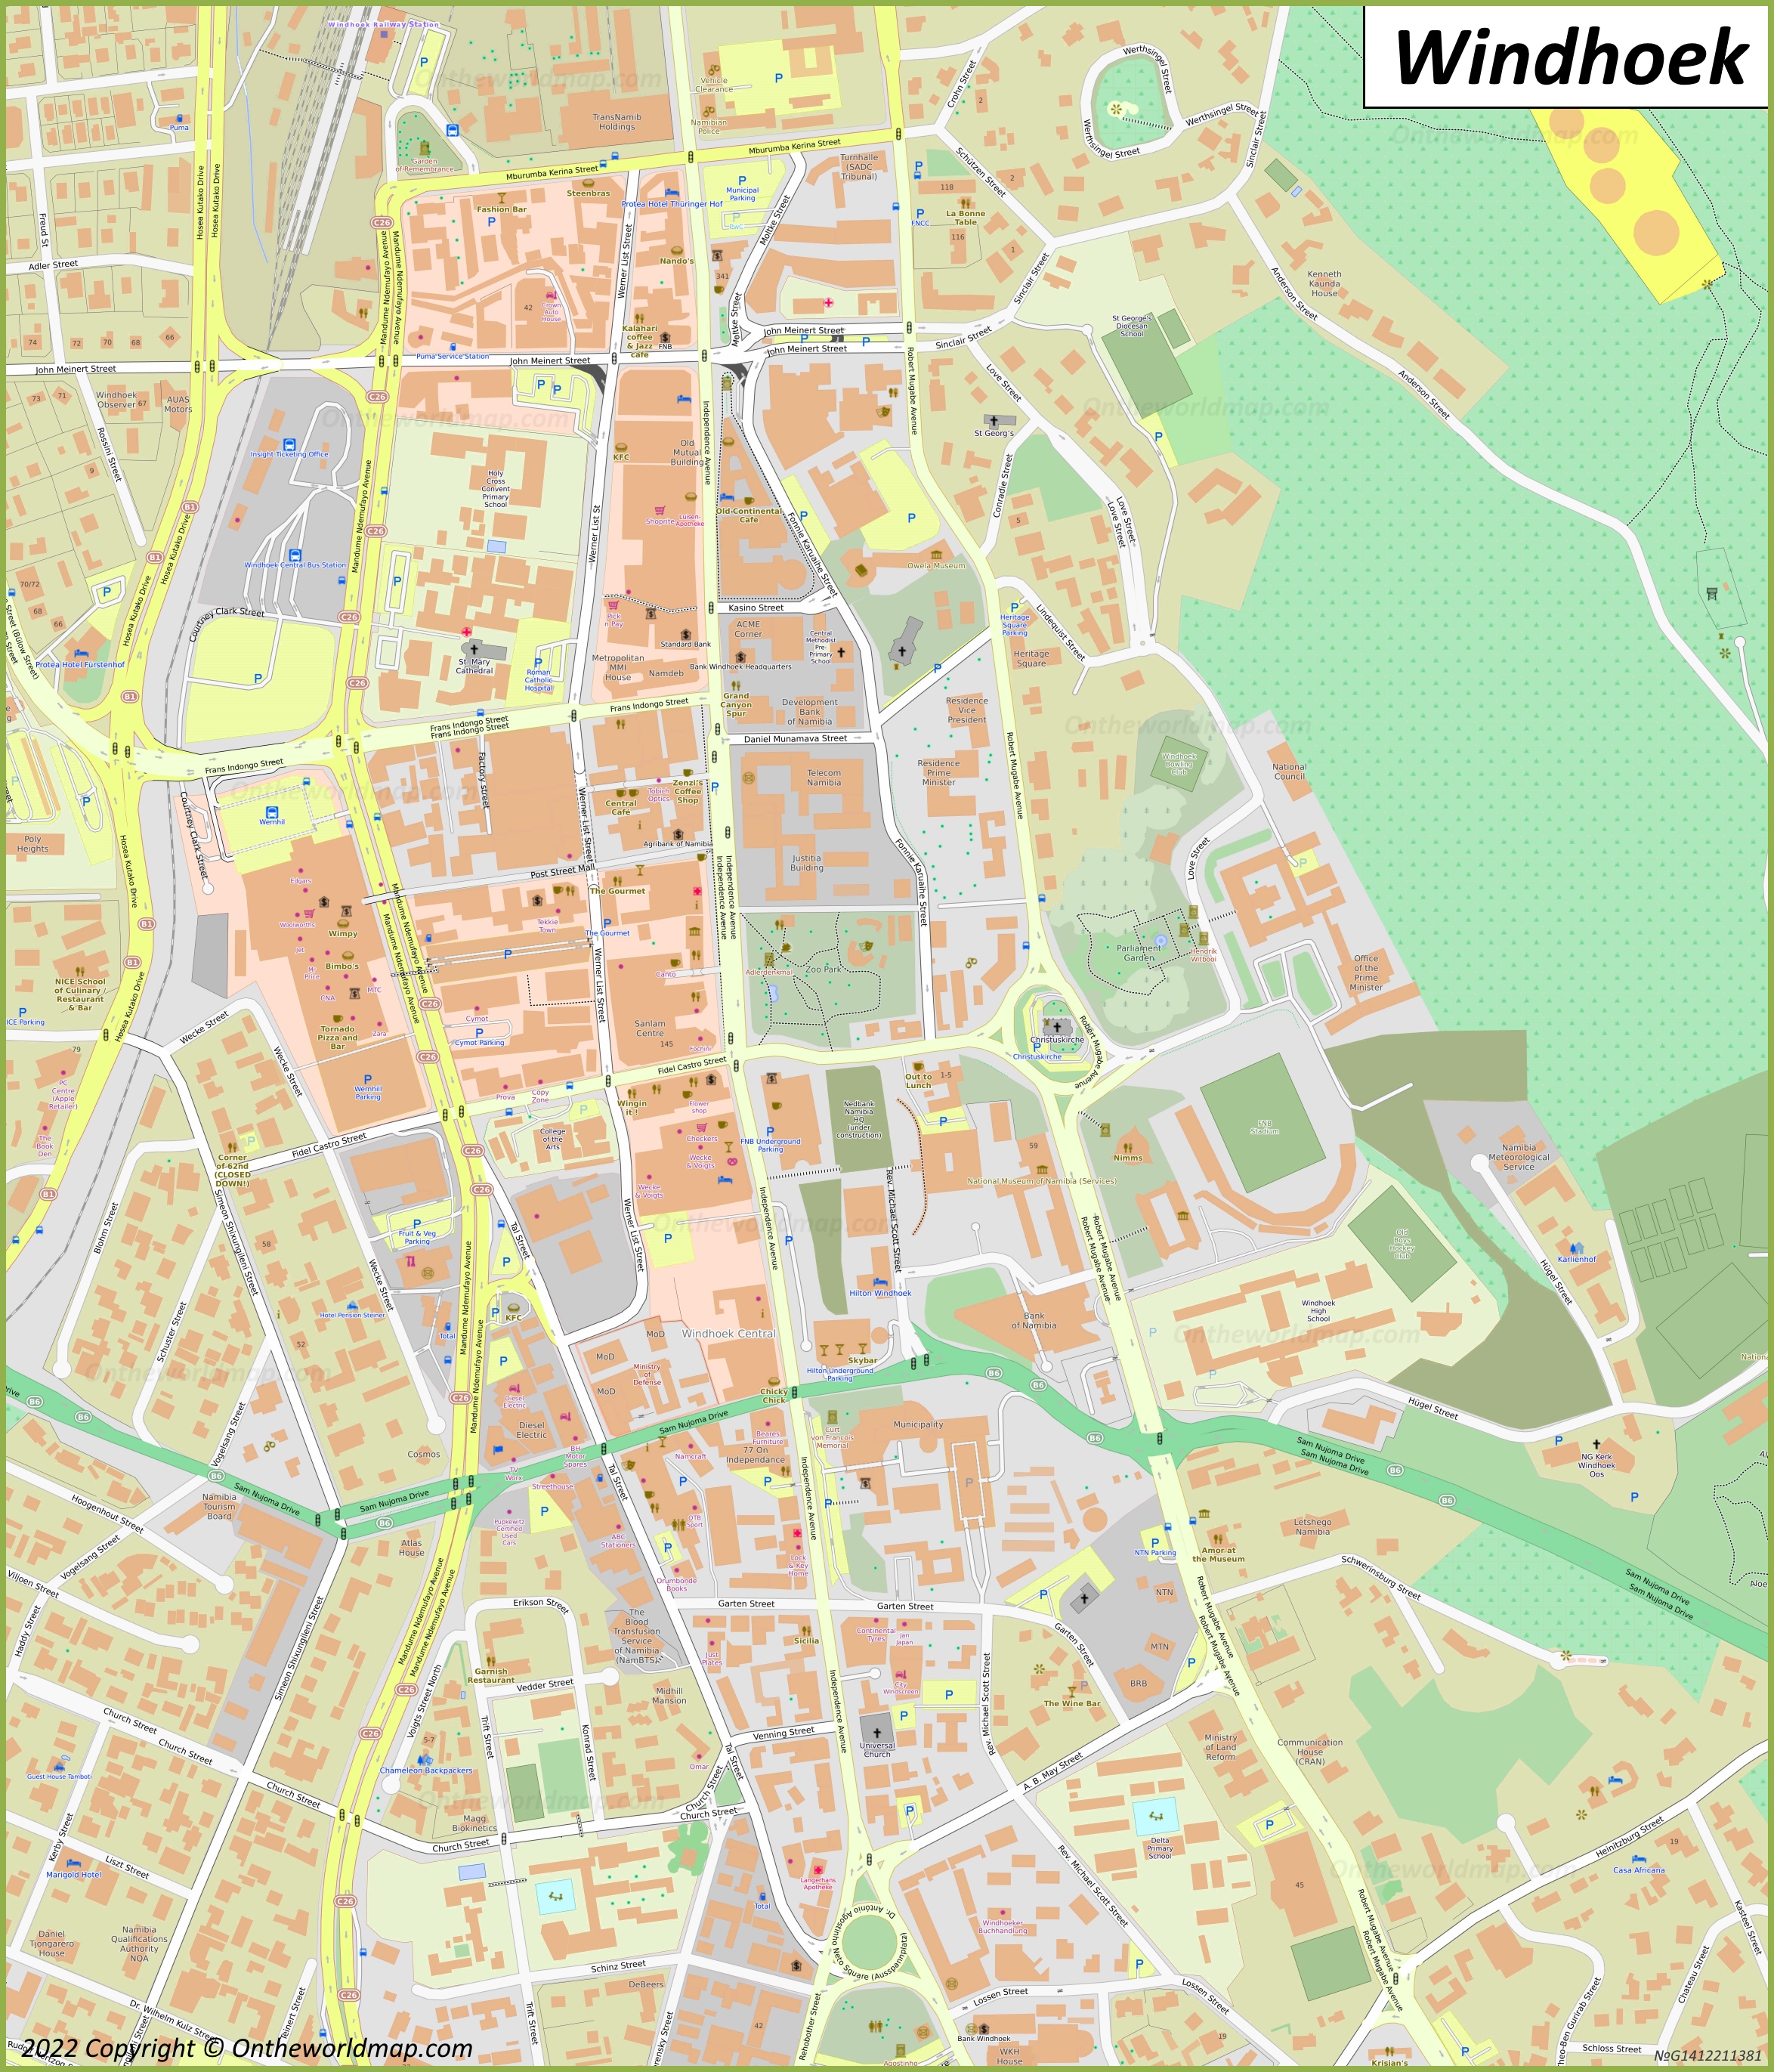 Windhoek City Centre Map